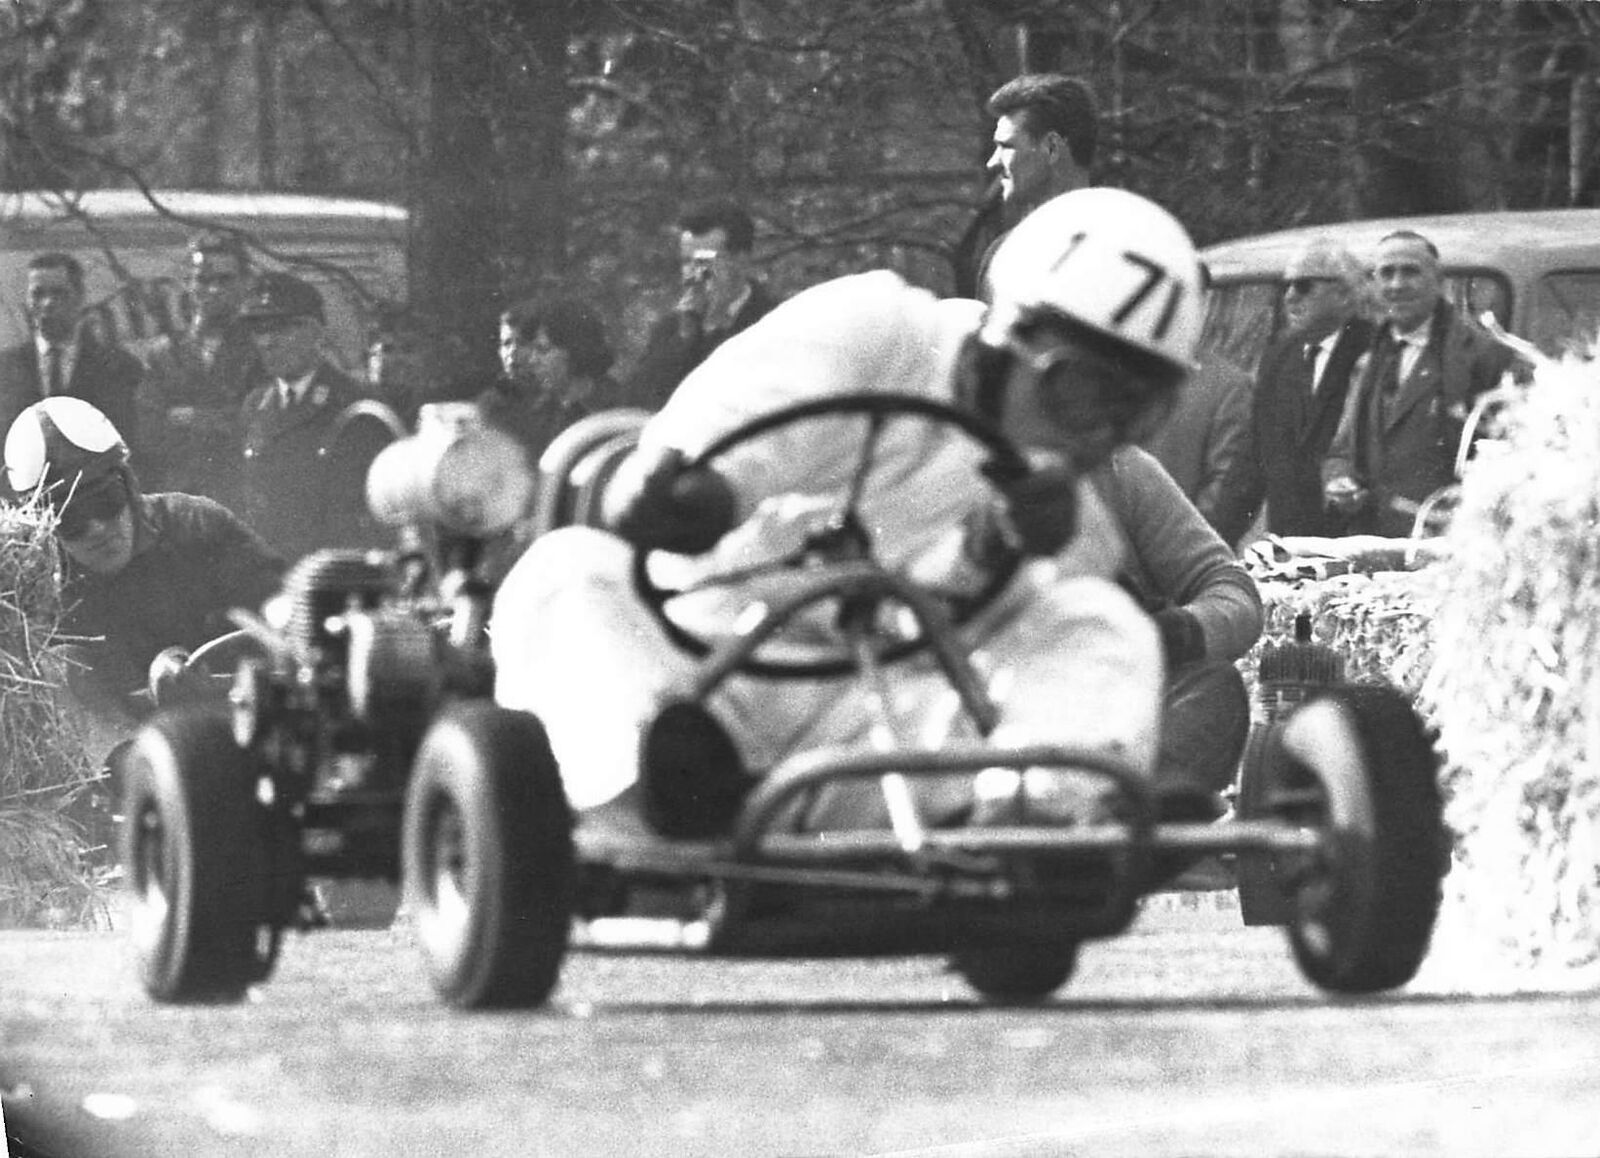 1961 Press Photo Go Kart Race New Track RHEINPREIS in Cologne Koln Germany #71